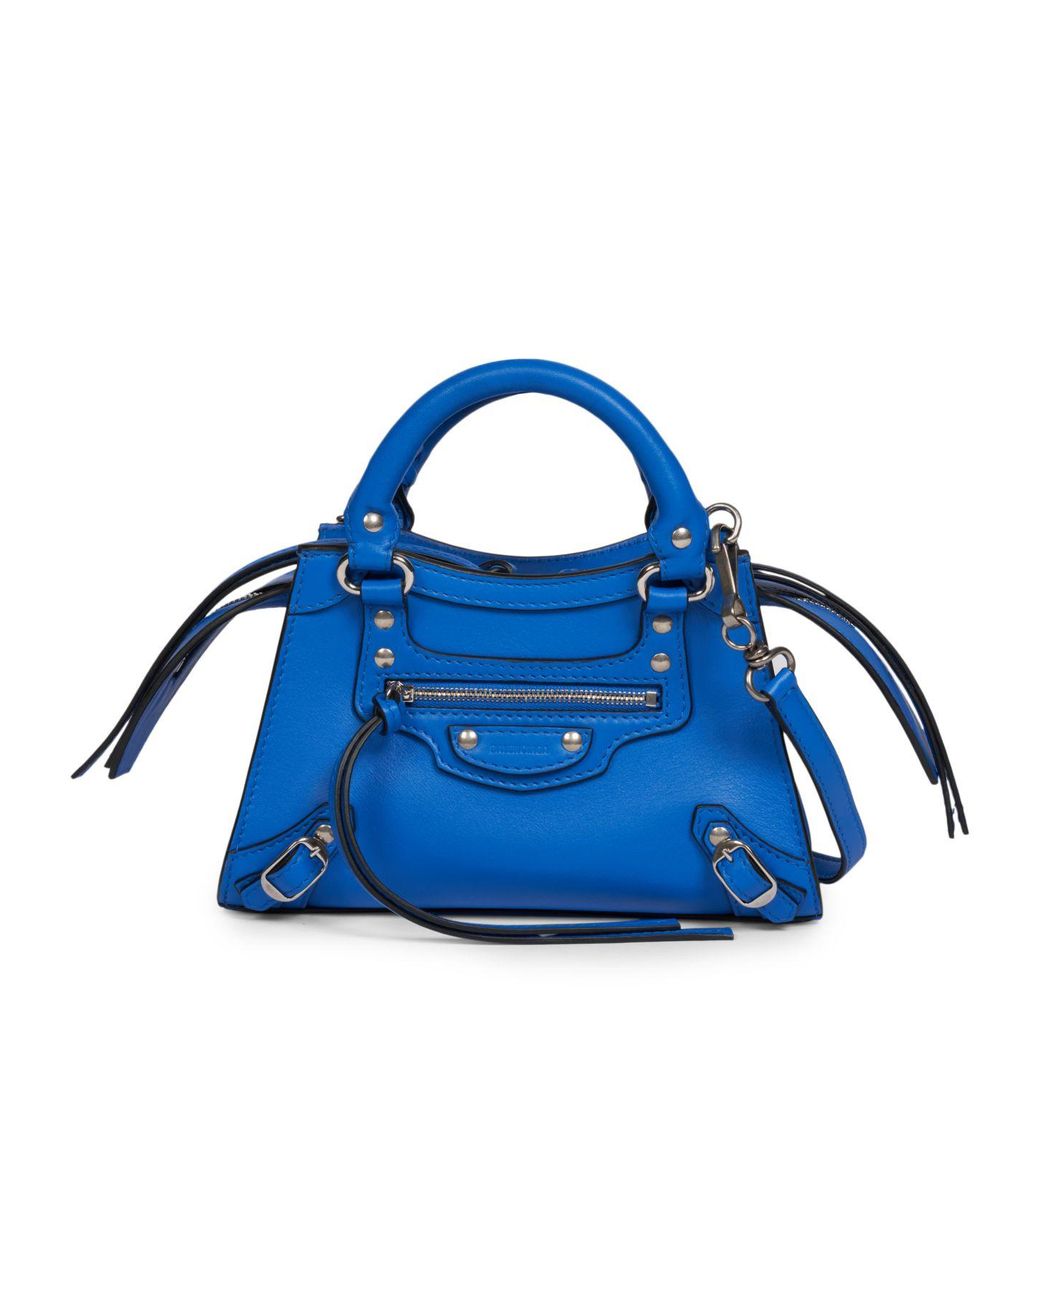 Balenciaga Mini Neo Classic City Bag in Blue - Lyst